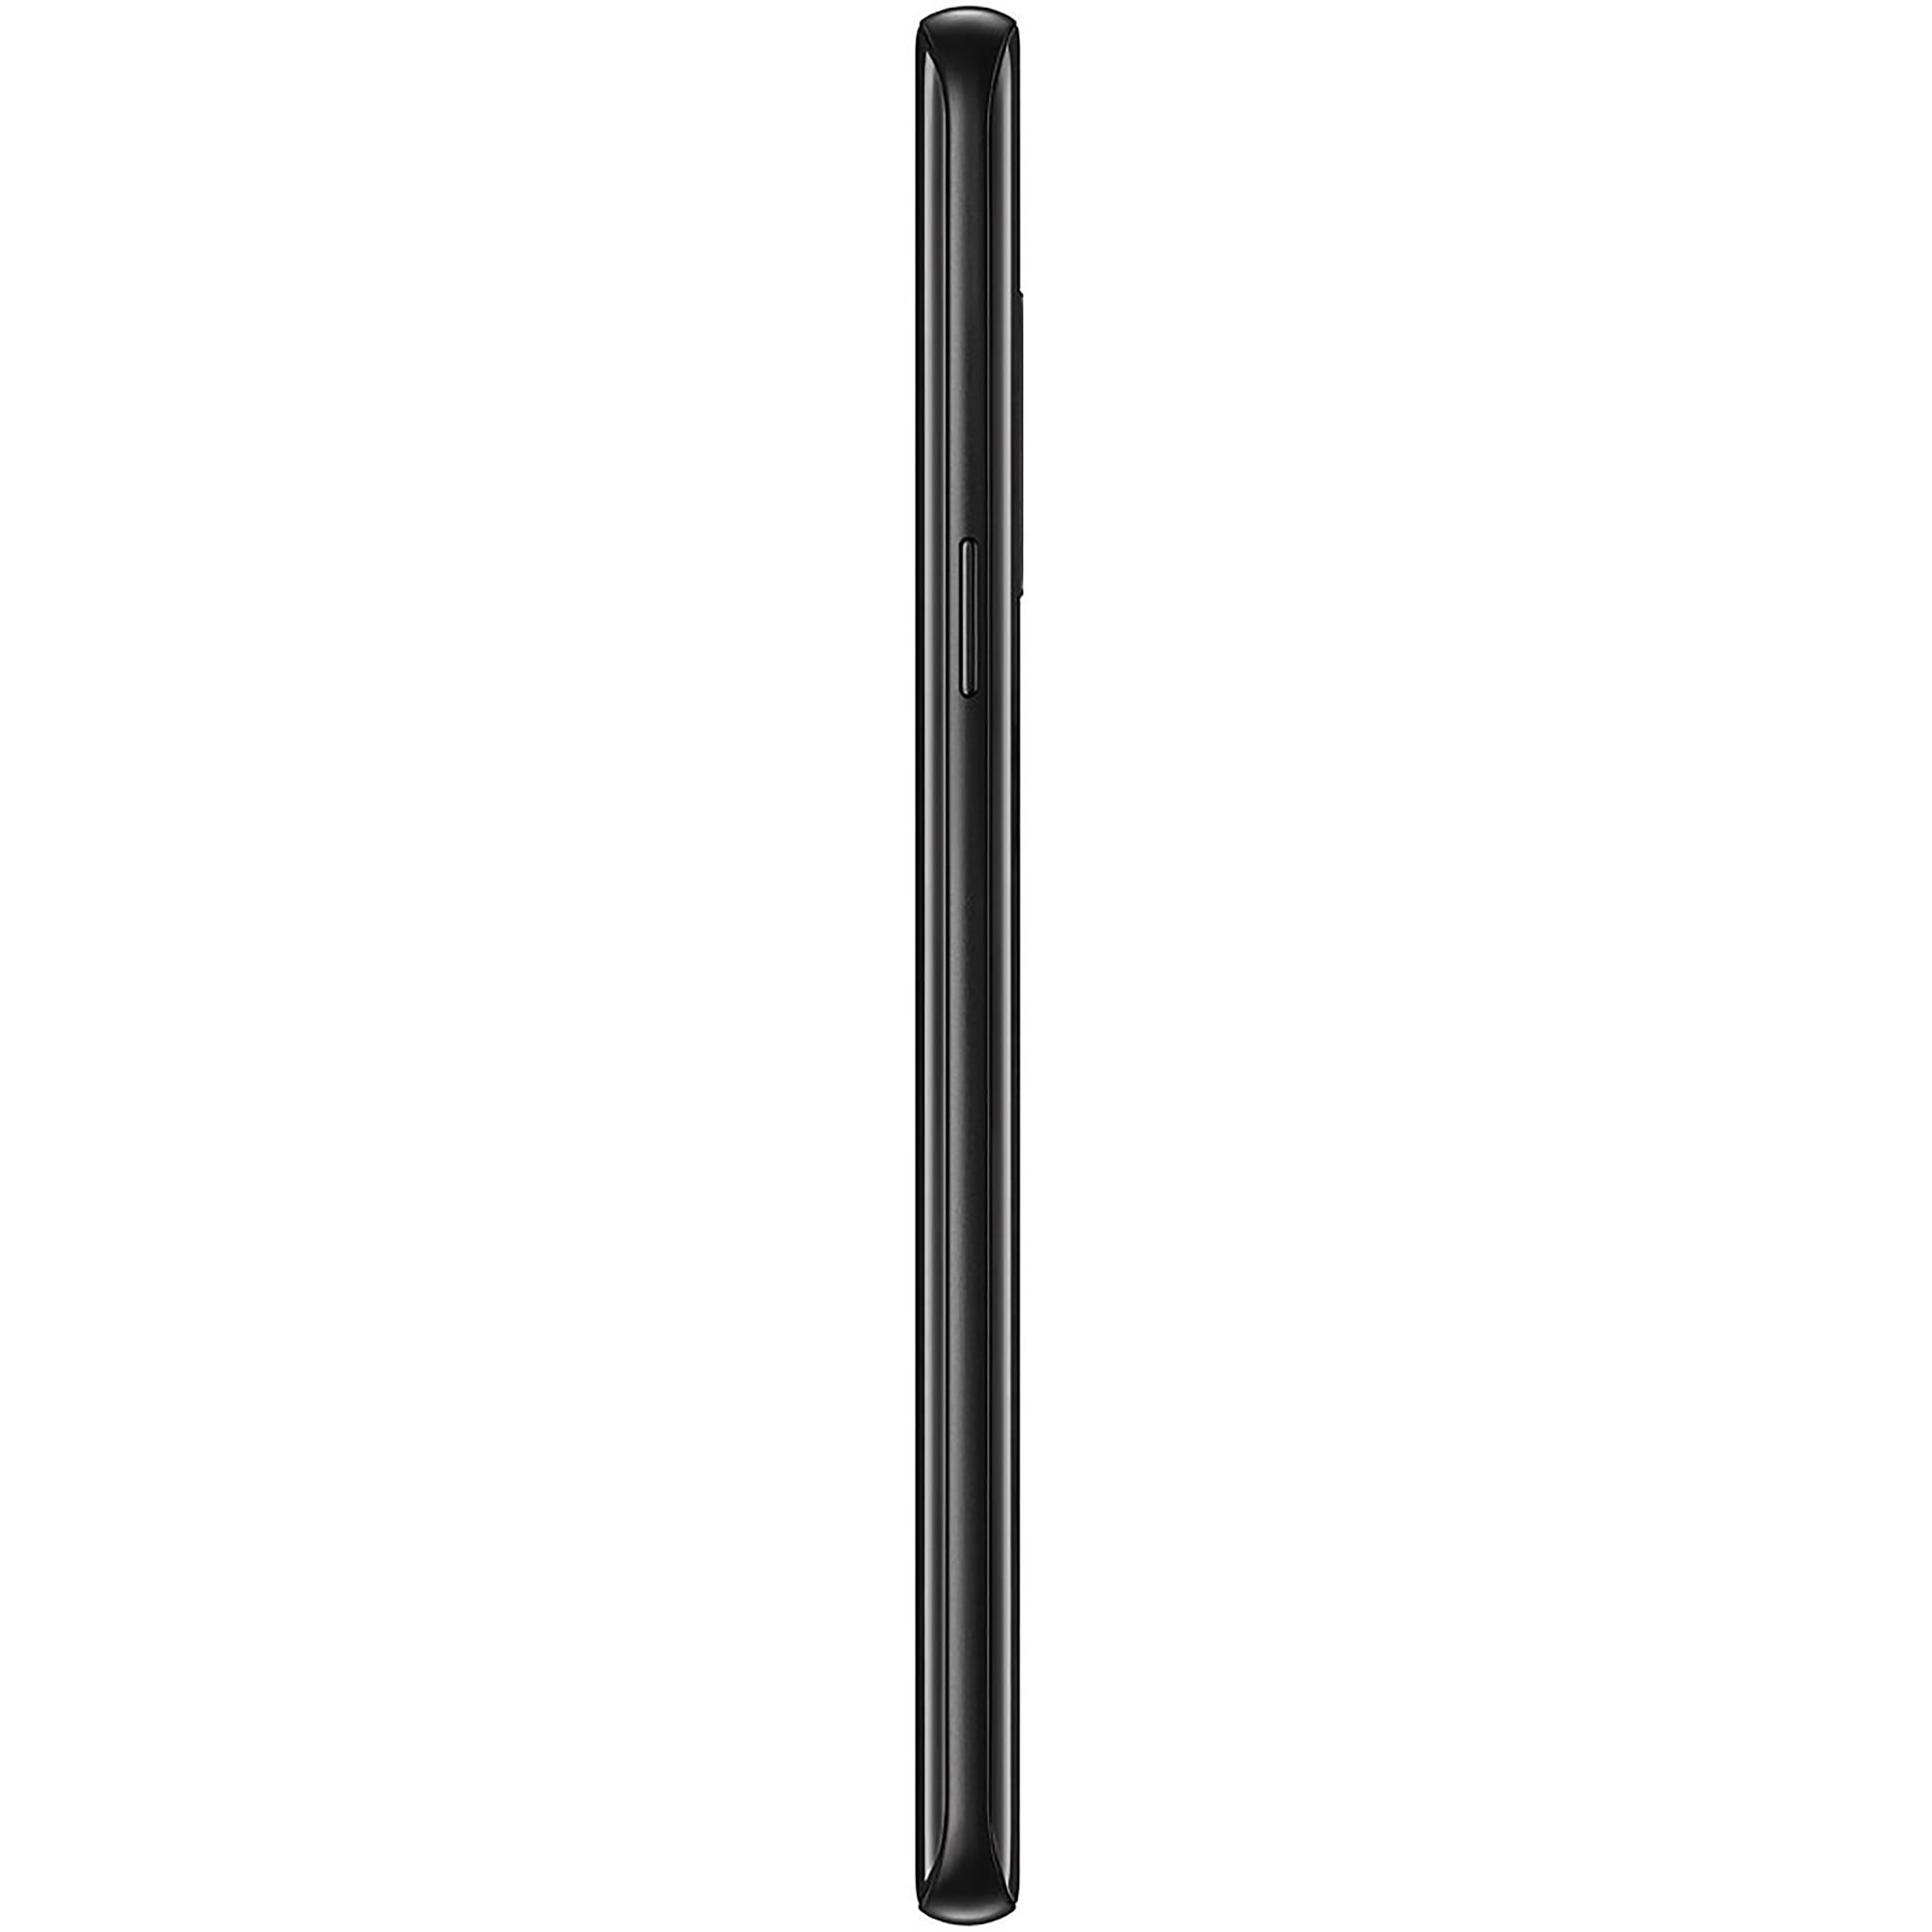 SAMSUNG Galaxy S9 G9600 64GB Unlocked GSM 4G LTE Phone w/ 12MP Camera -  Titanium Gray